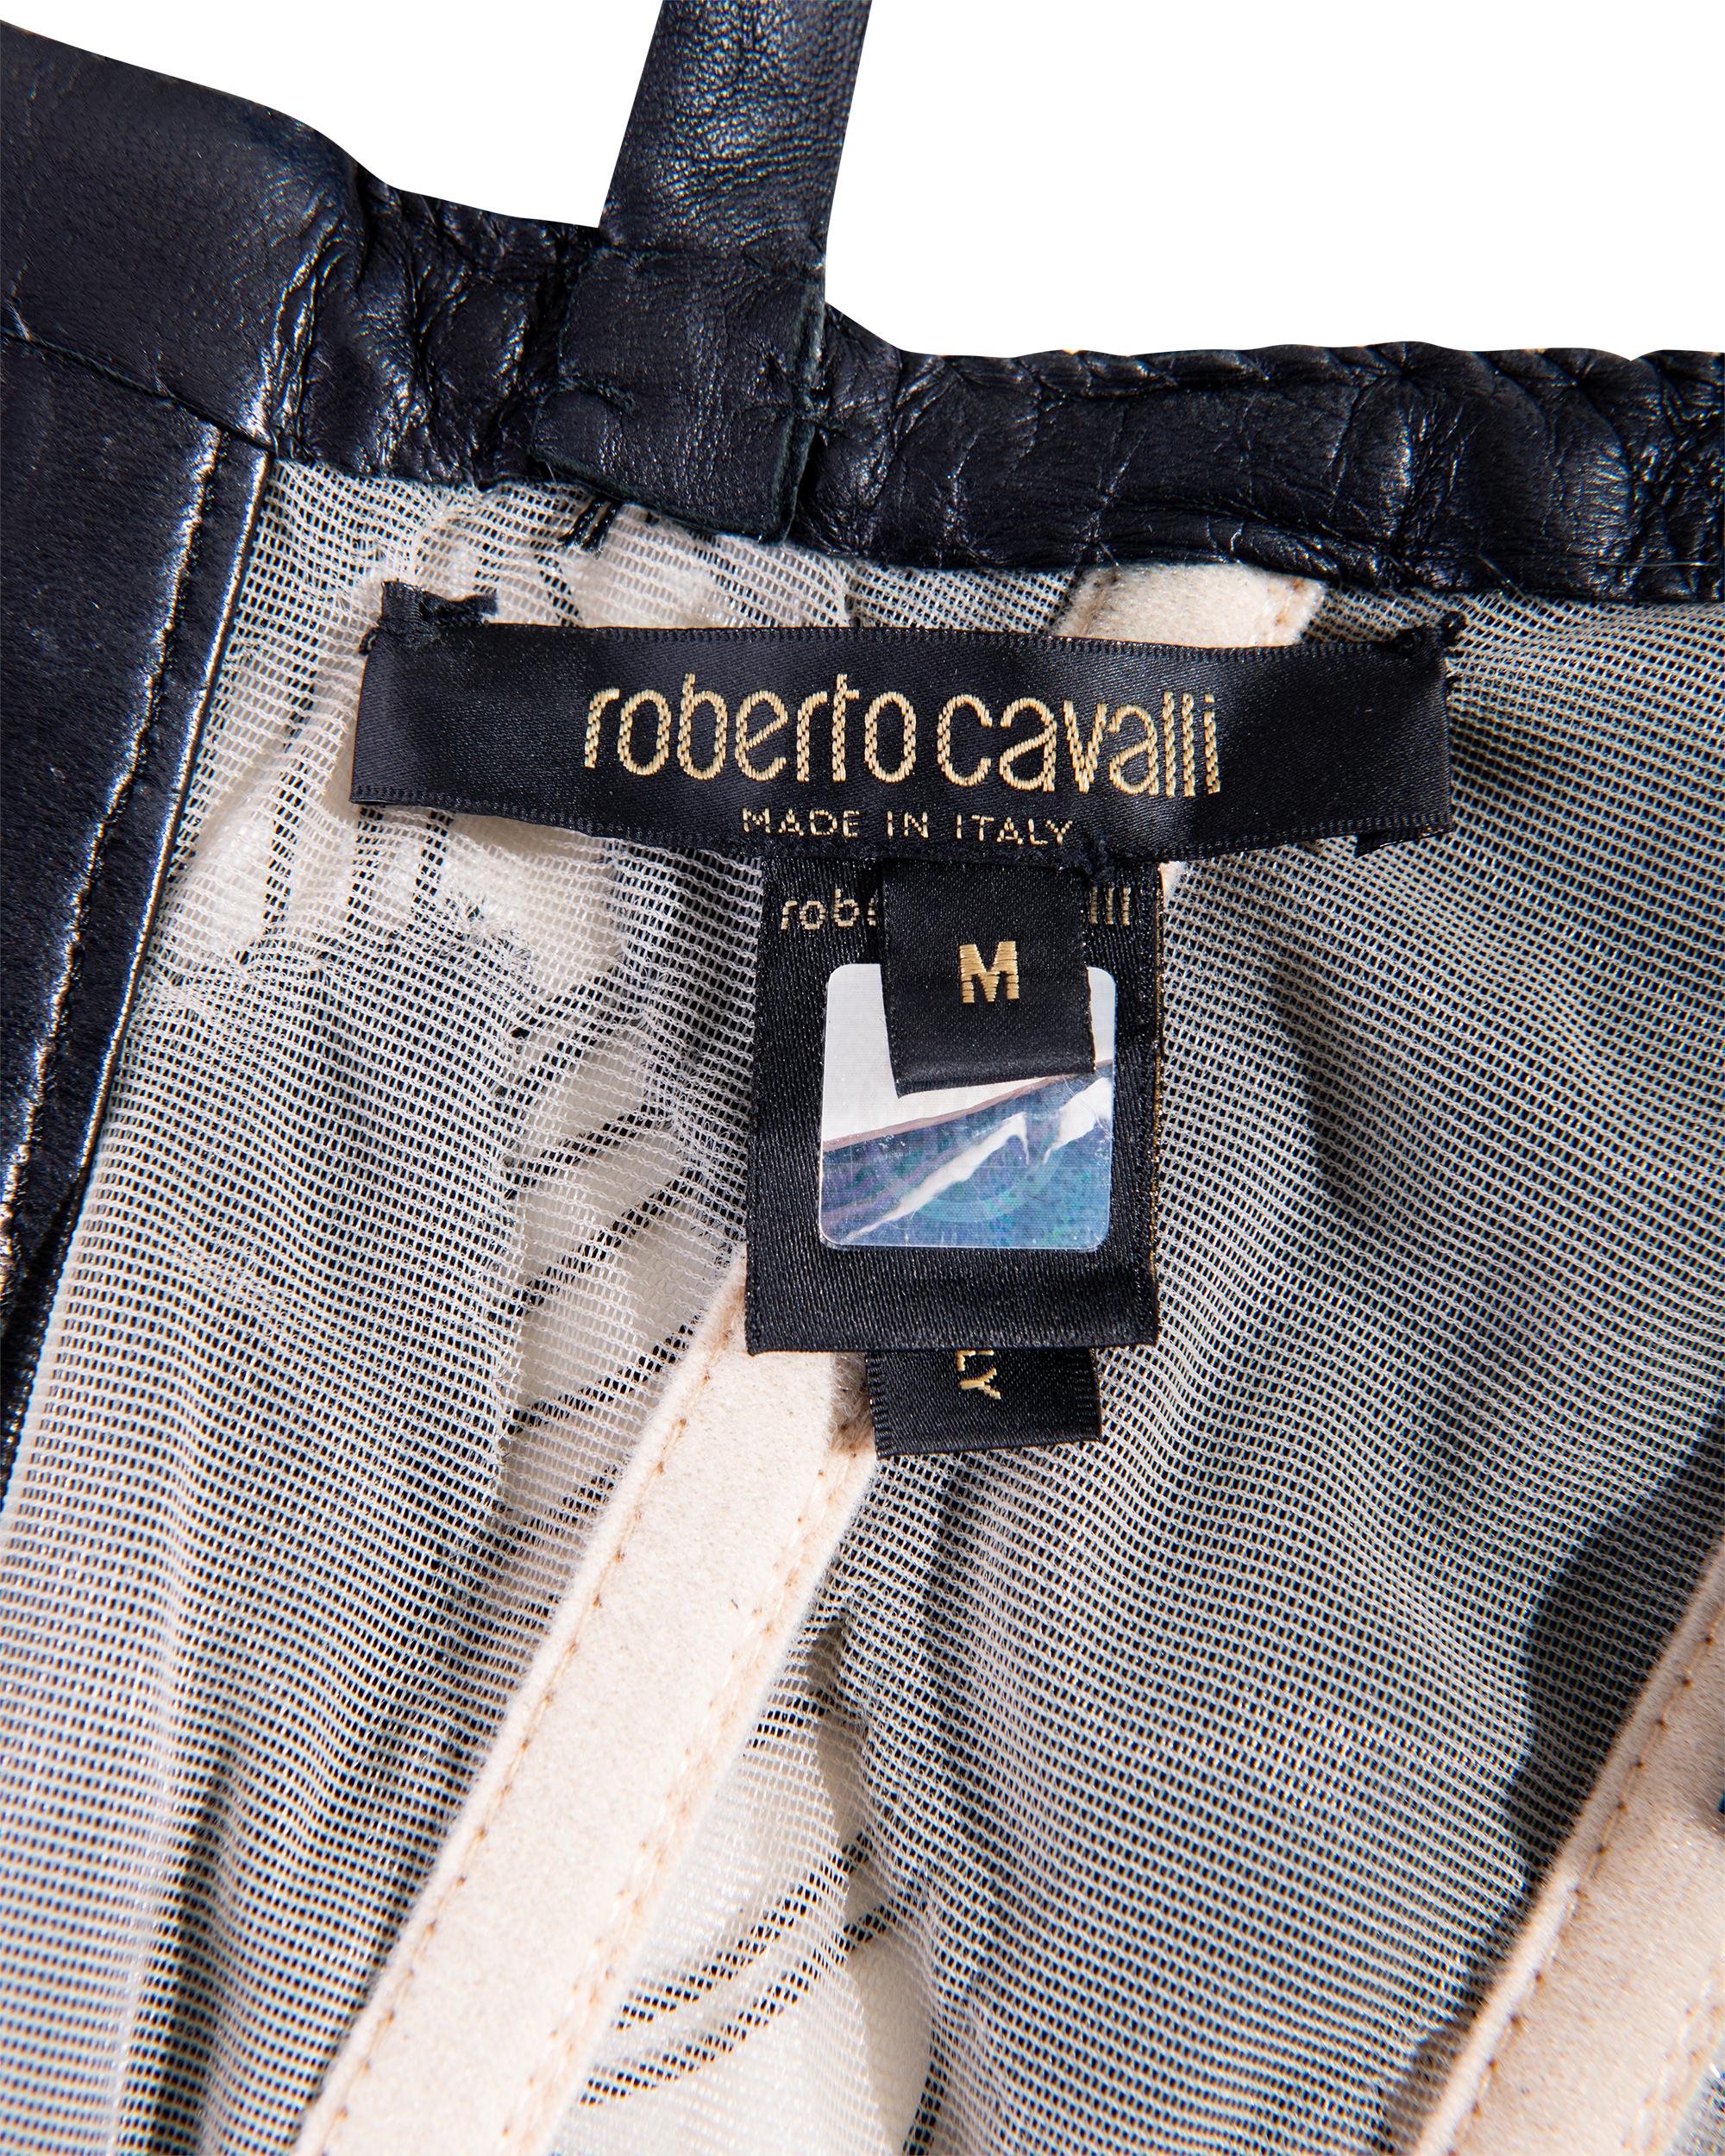 S/S 2004 Roberto Cavalli Geometric Black Embellished Leather Corset Fringe Dress For Sale 8